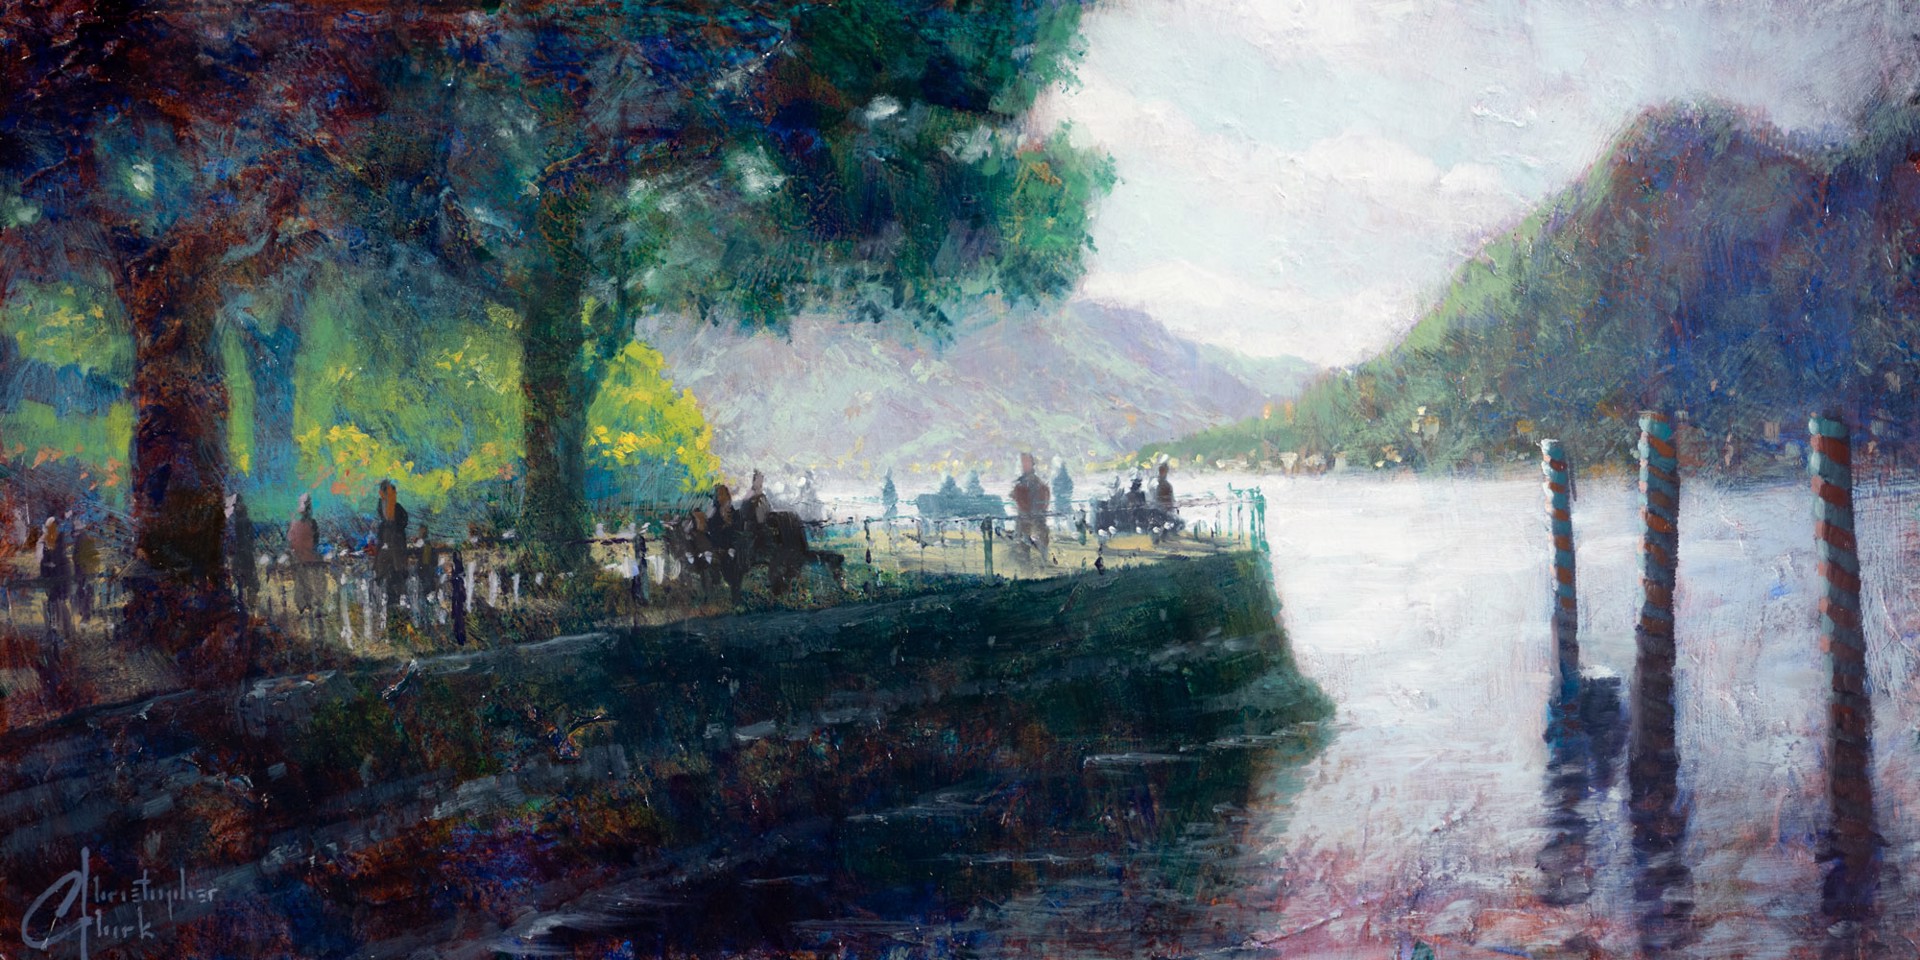 Lake Como Dock by Christopher Clark